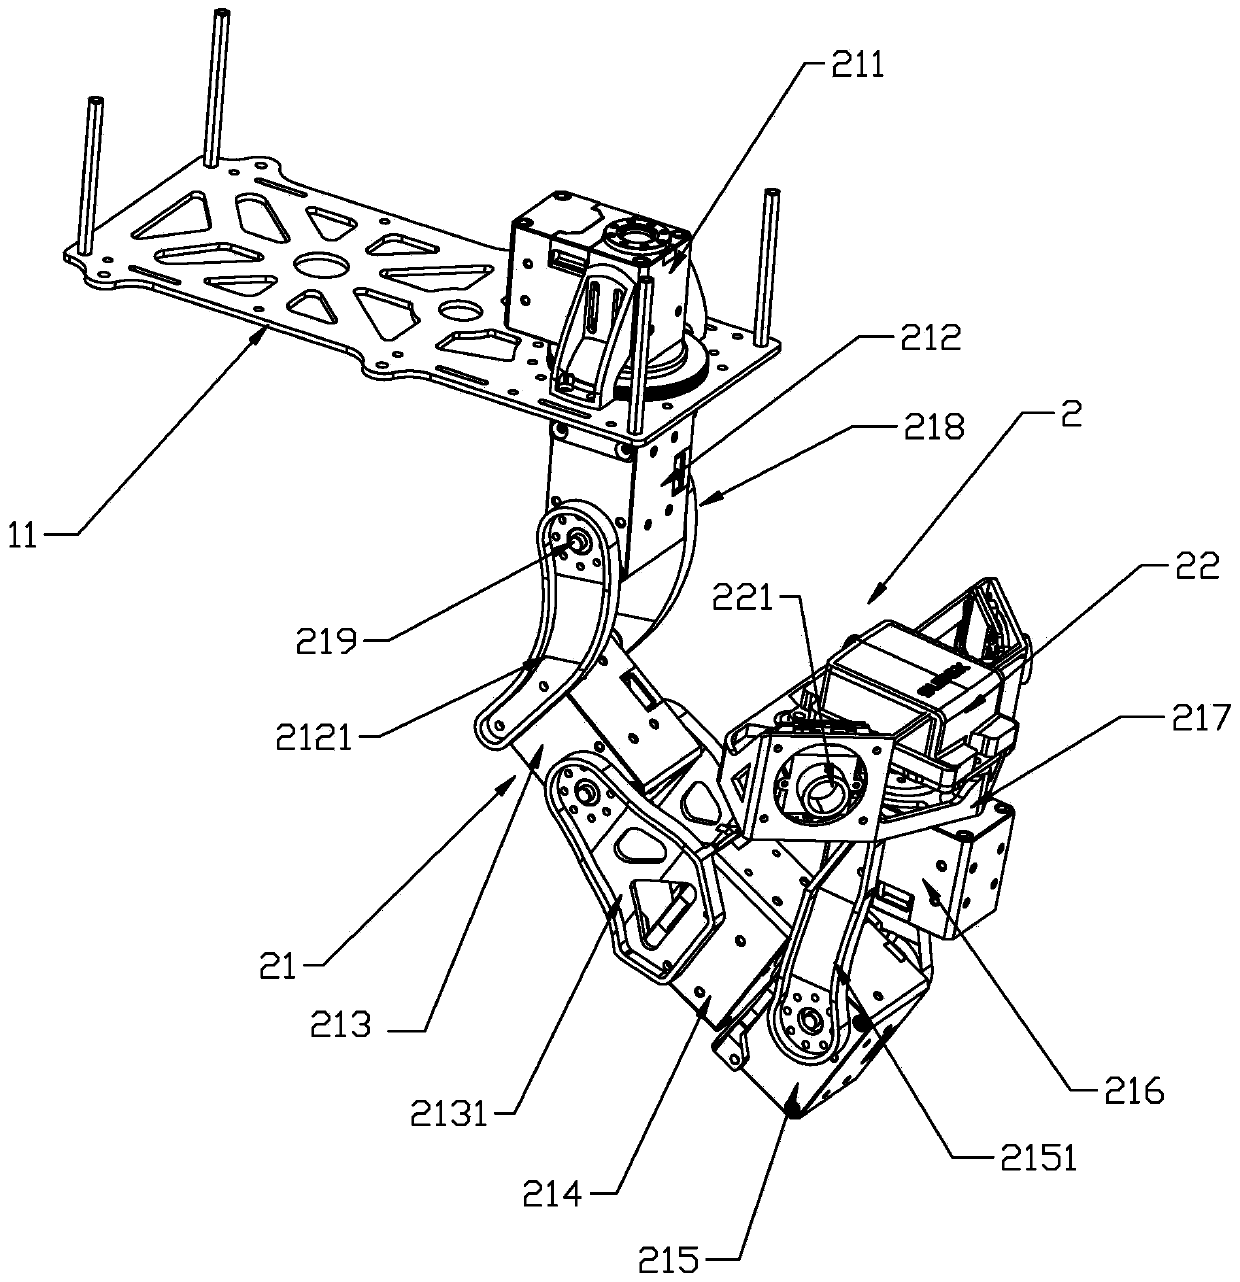 Bionic-based flying mechanical neck eye system and control method